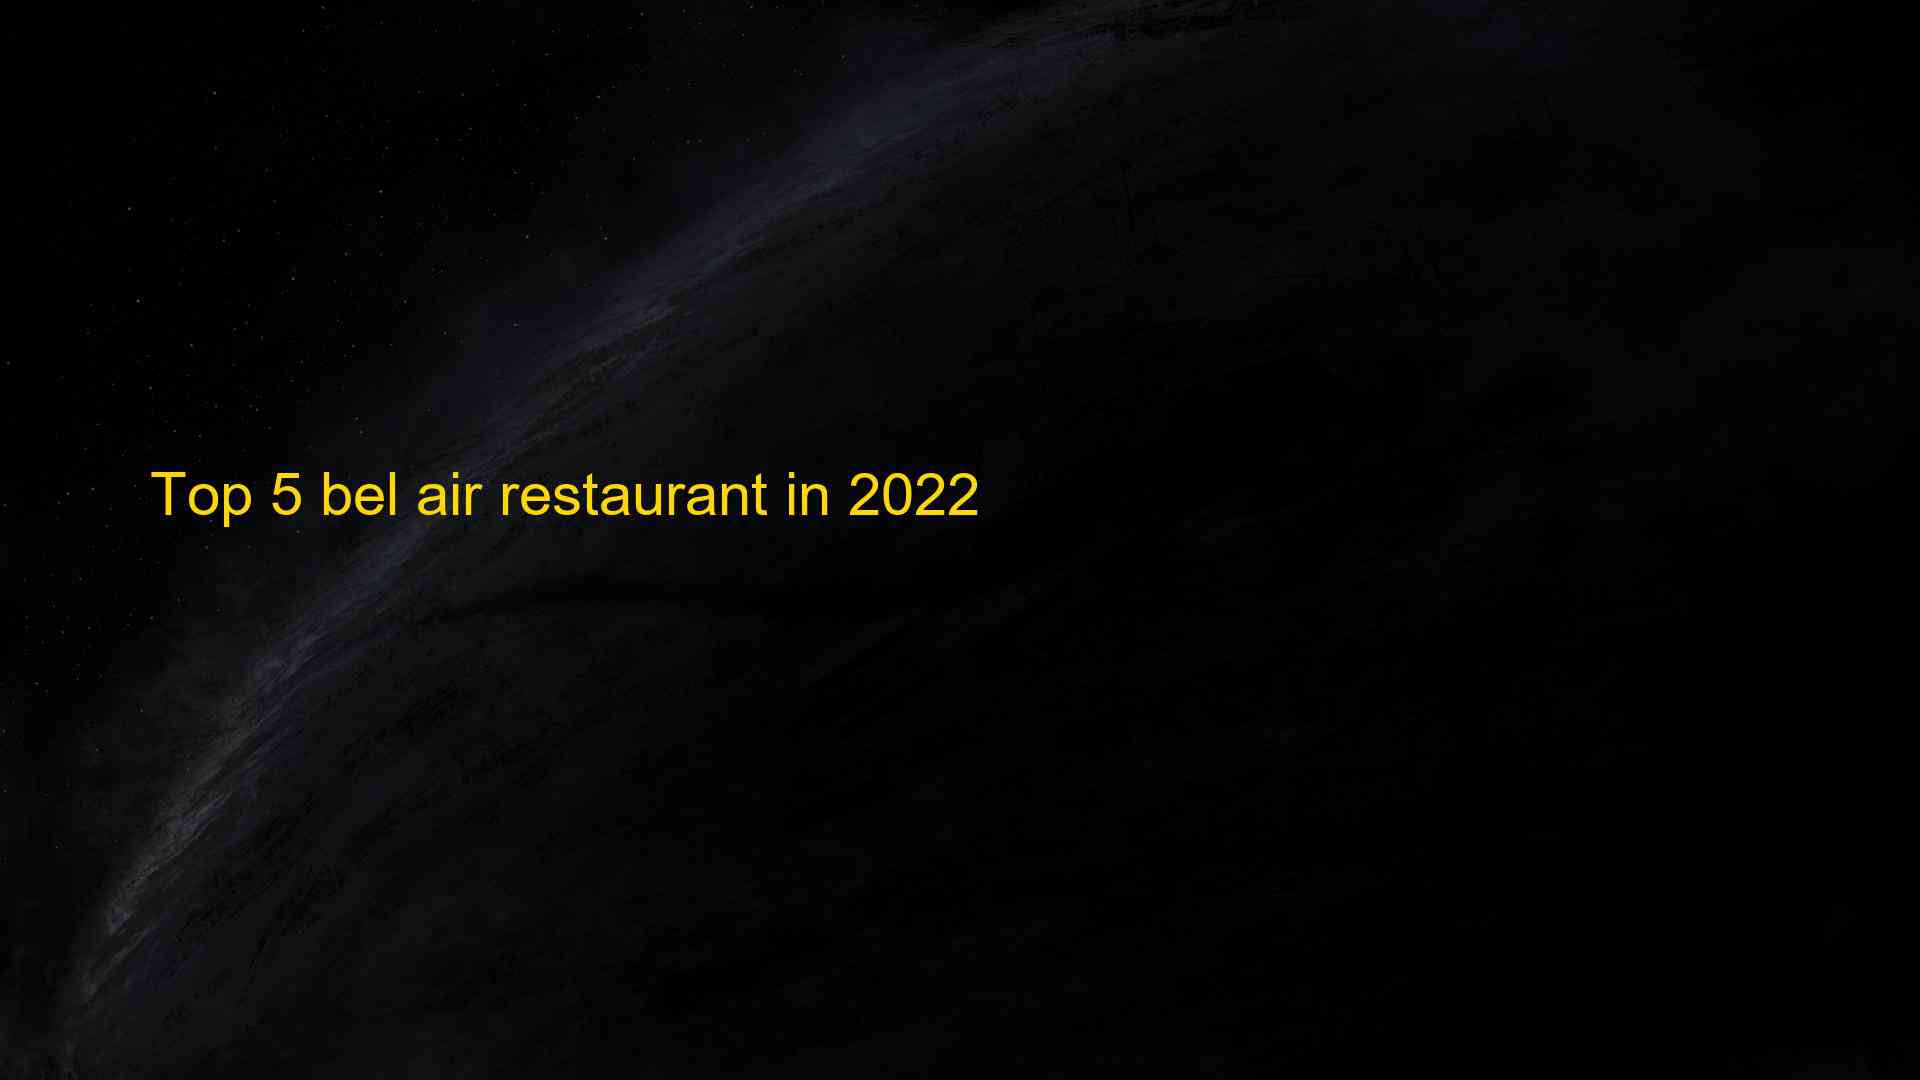 Top 5 bel air restaurant in 2022 1663539889